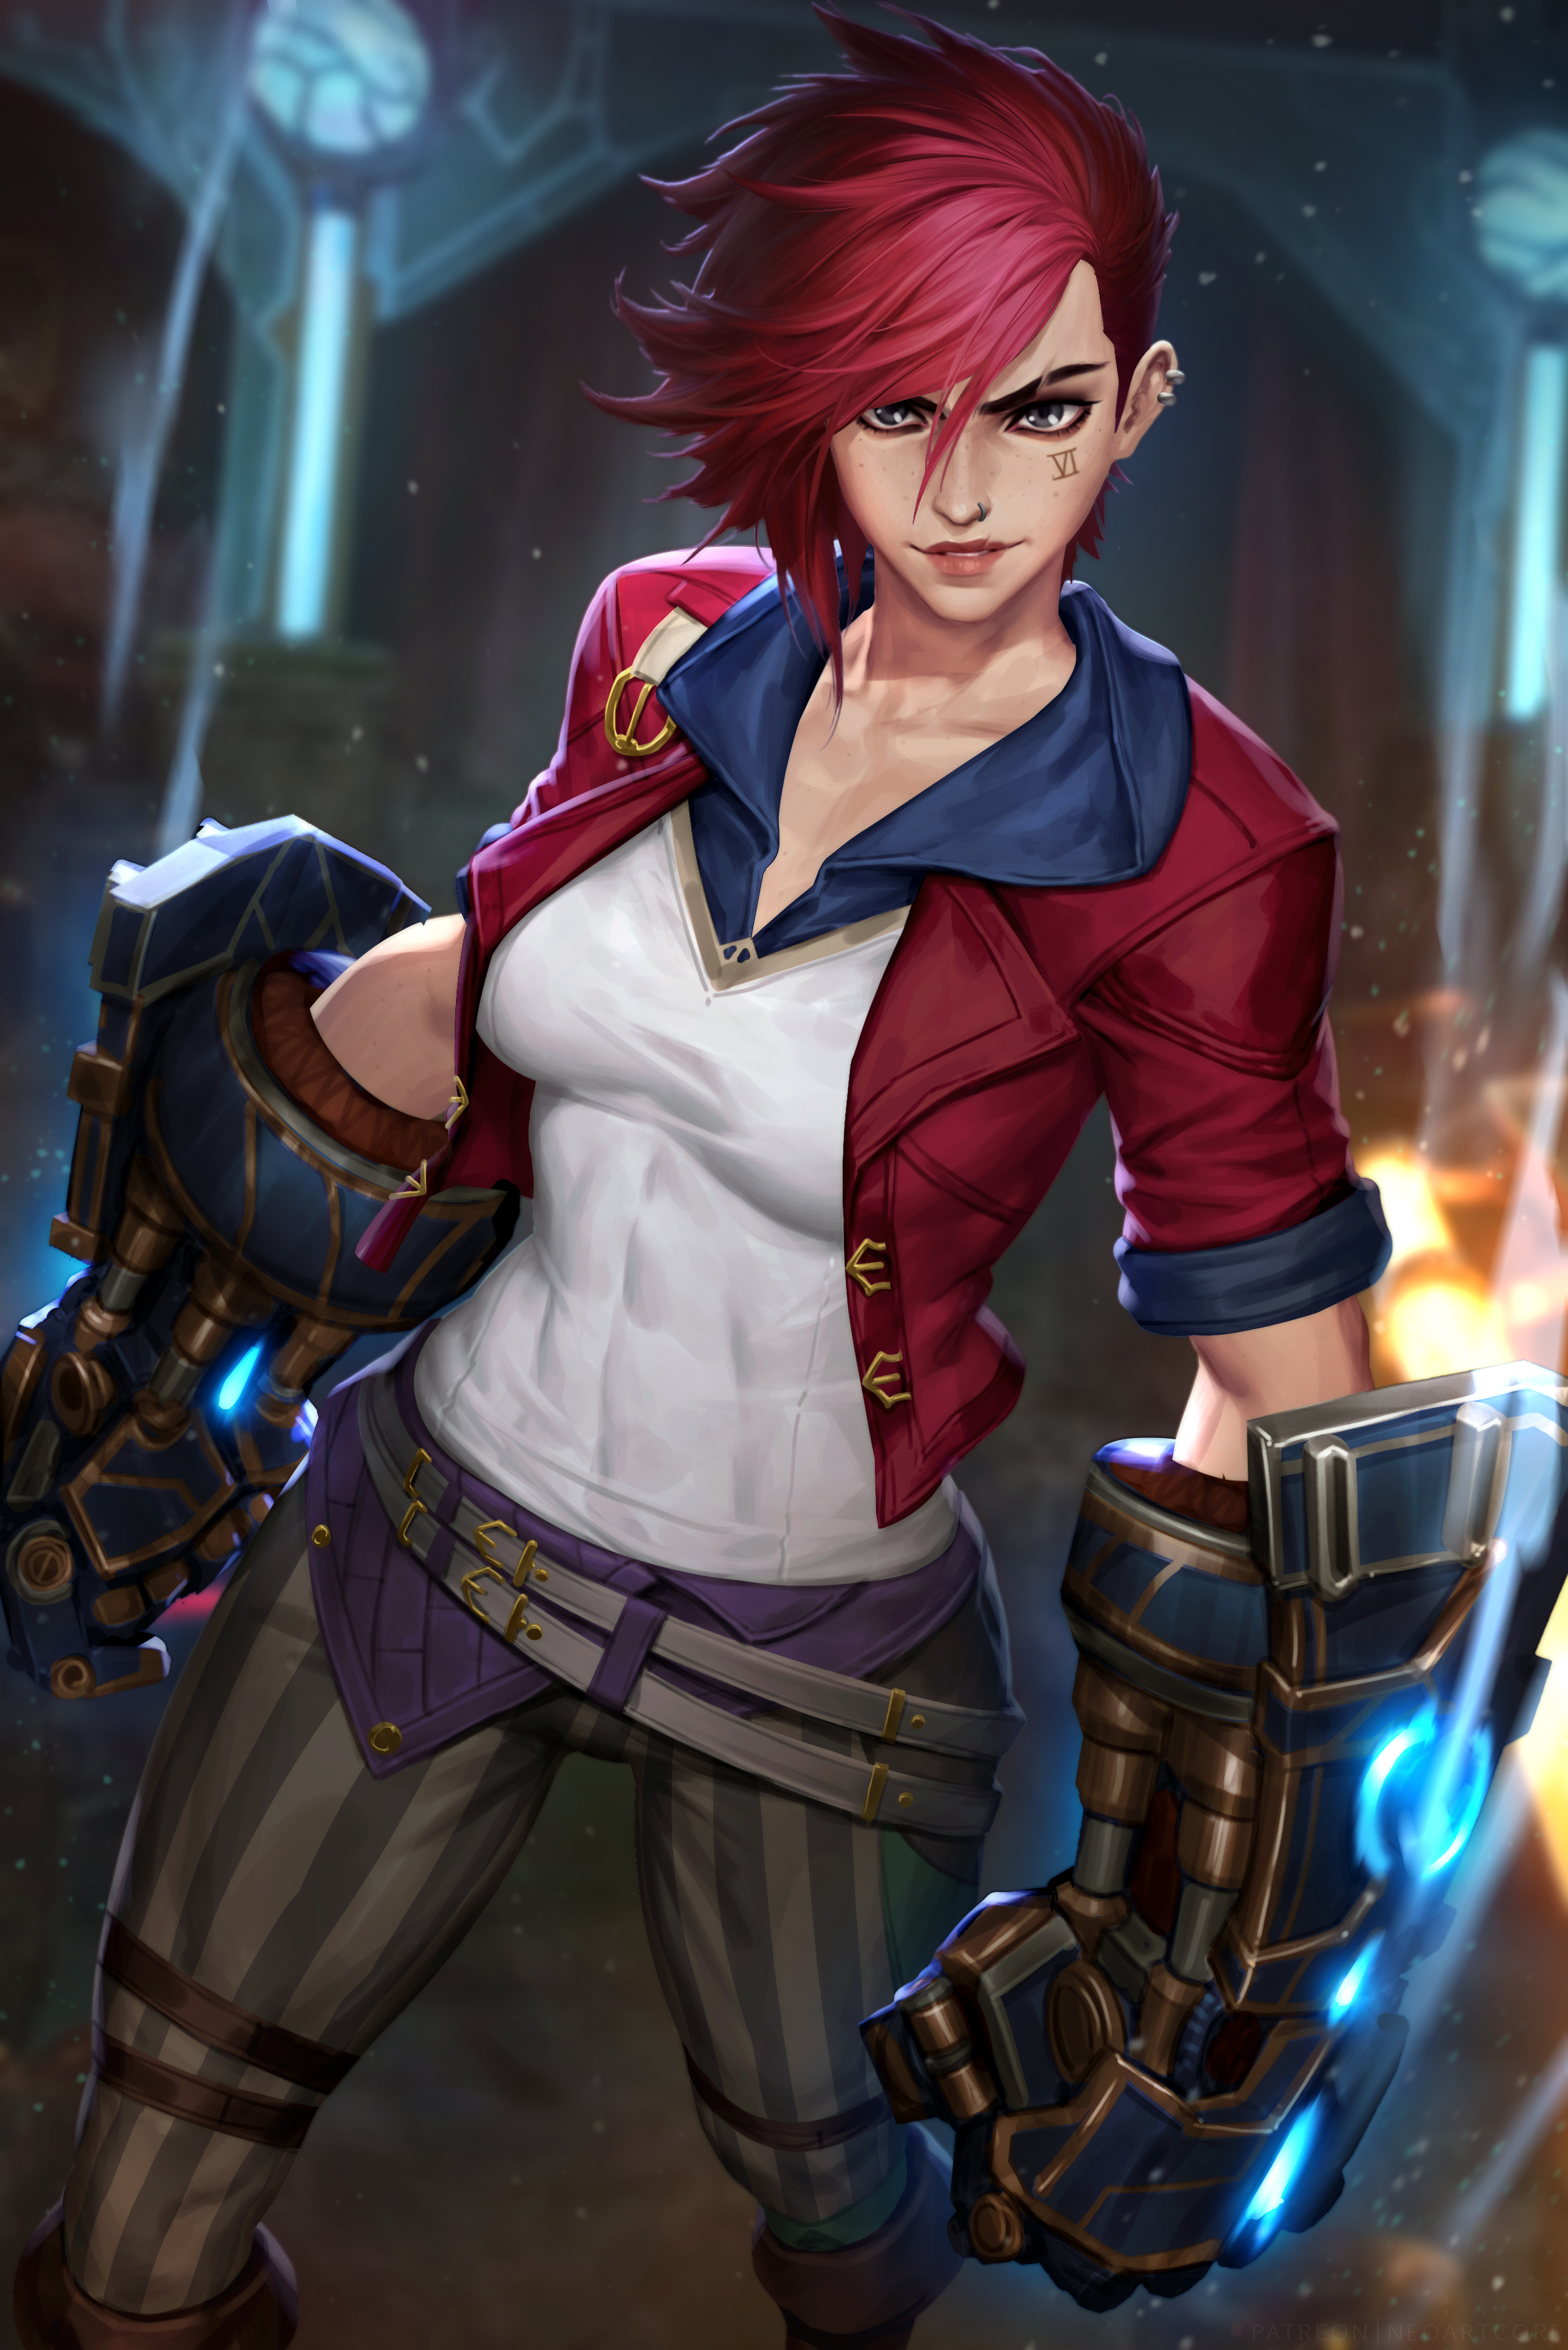 Vi League Of Legends League Of Legends Arcane Video Games Video Game Girls Short Hair Redhead Jacket 2400x3597